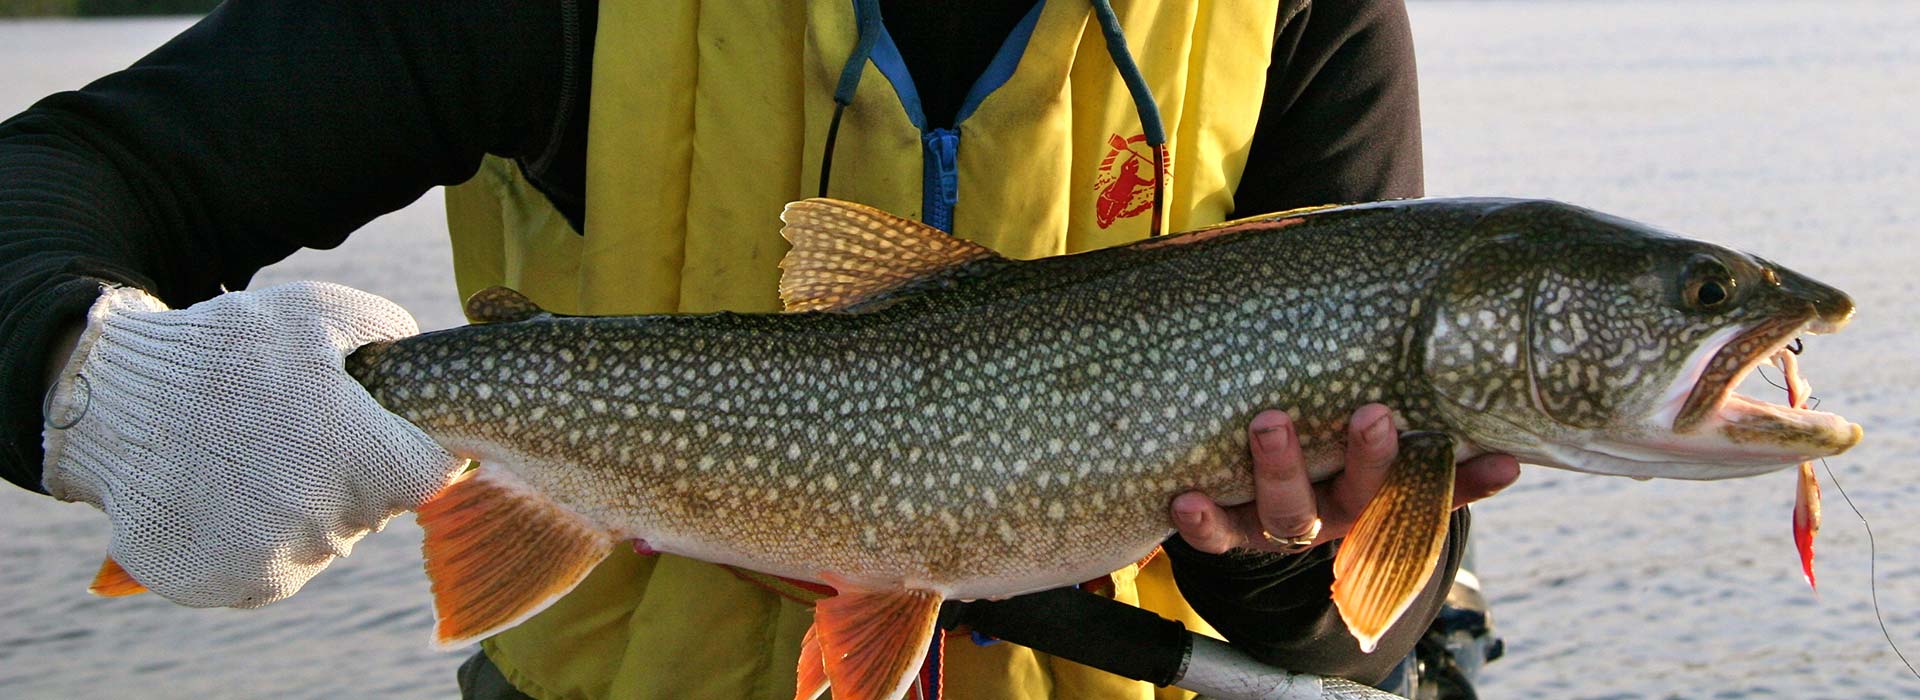 https://www.algomacountry.com/wp-content/uploads/2015/12/lake-trout-fishing1.jpg